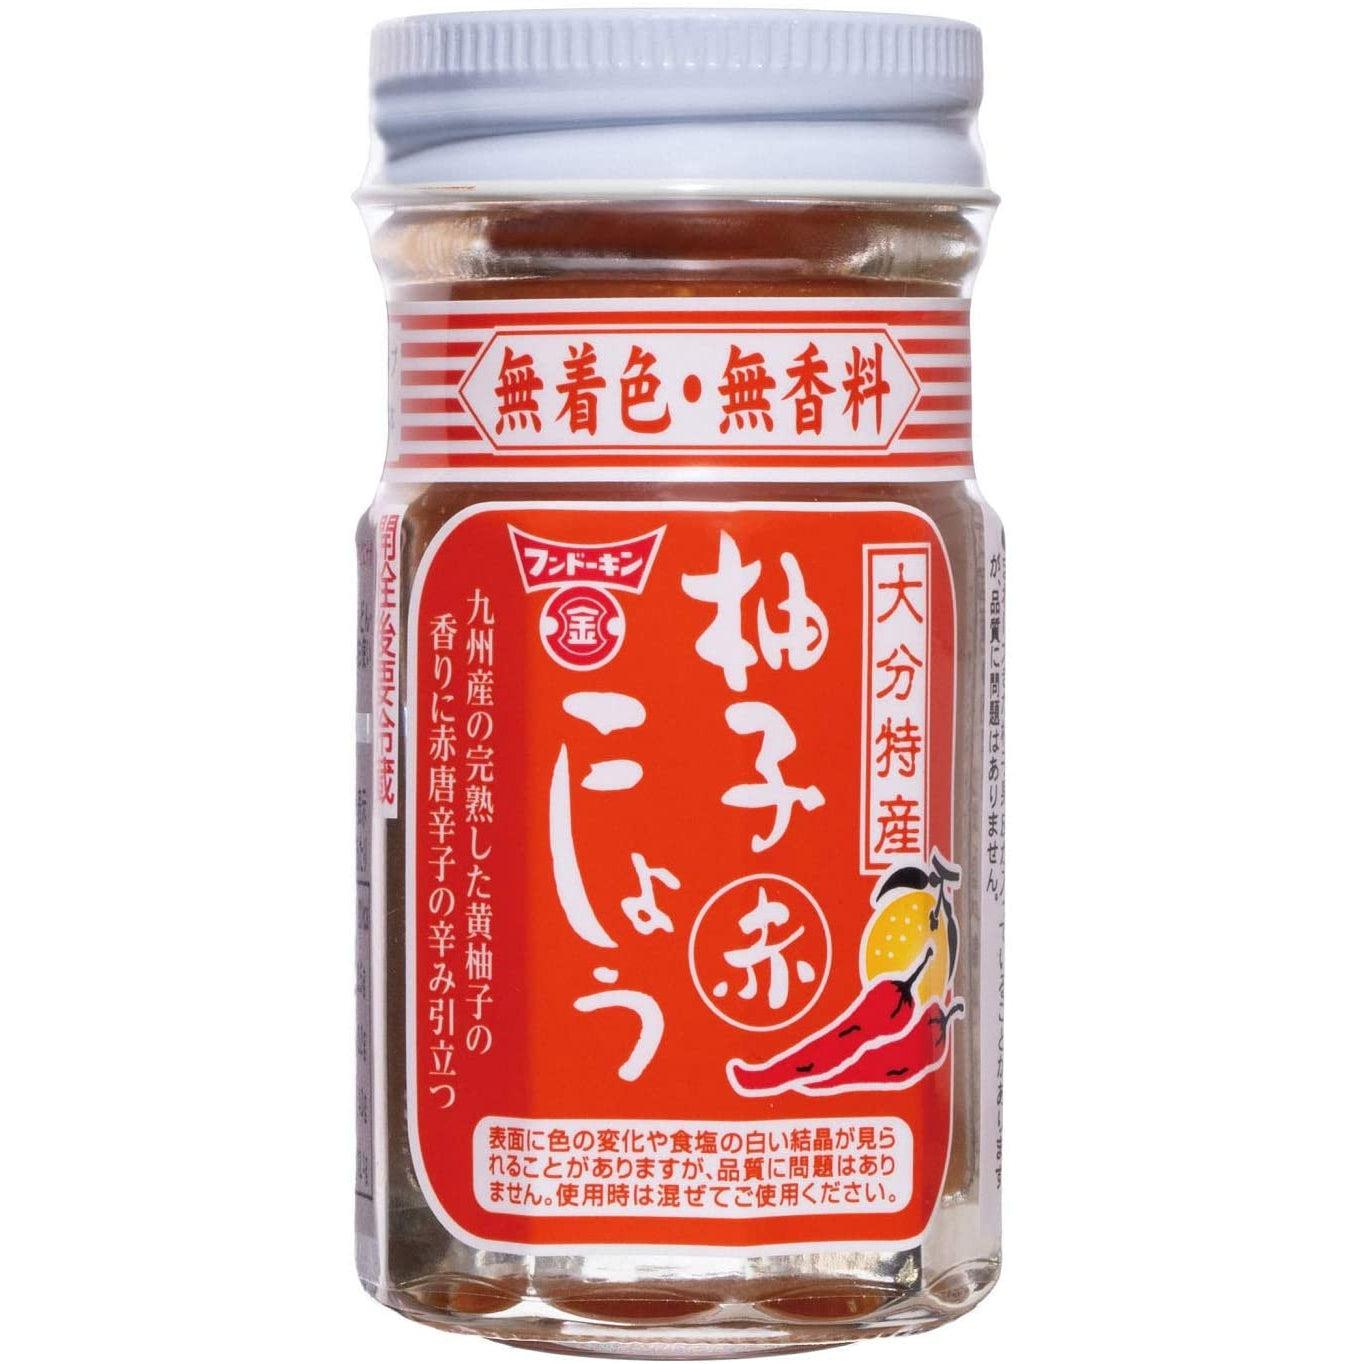 Fundokin Red Yuzu Kosho Sauce Spicy Citrus Seasoning Paste 50g